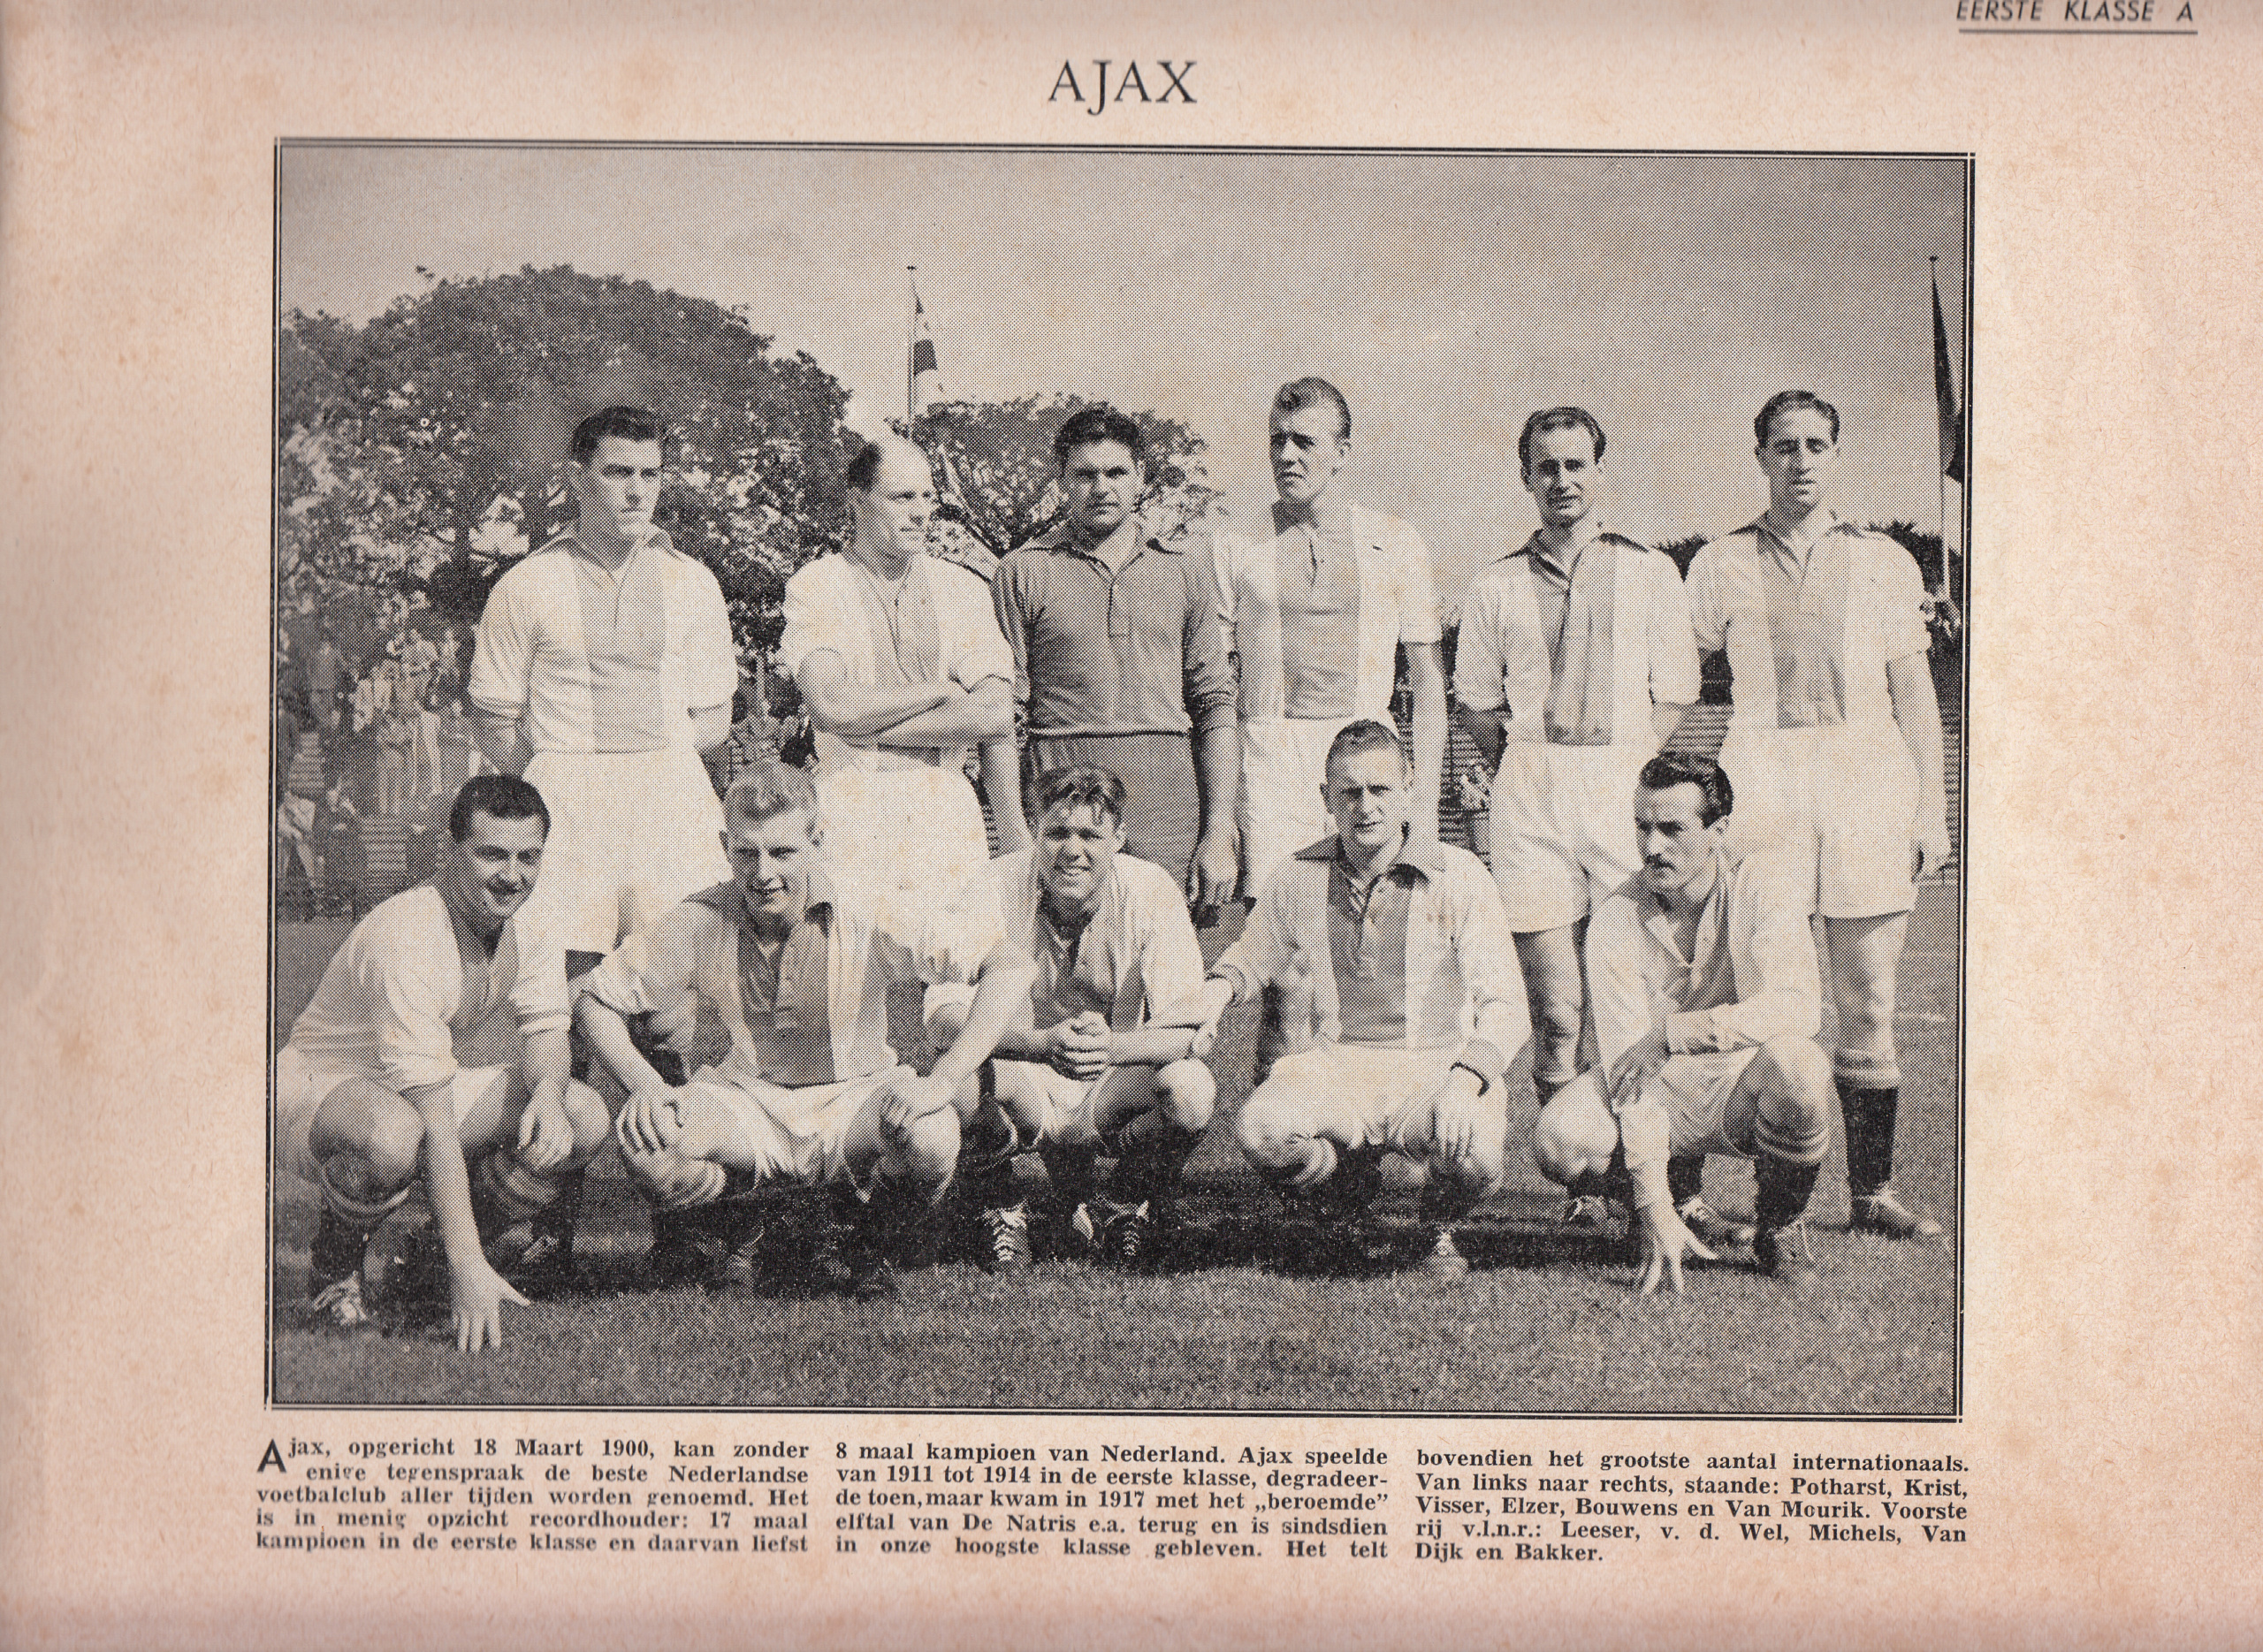 1e klasse A Ajax Amsterdam